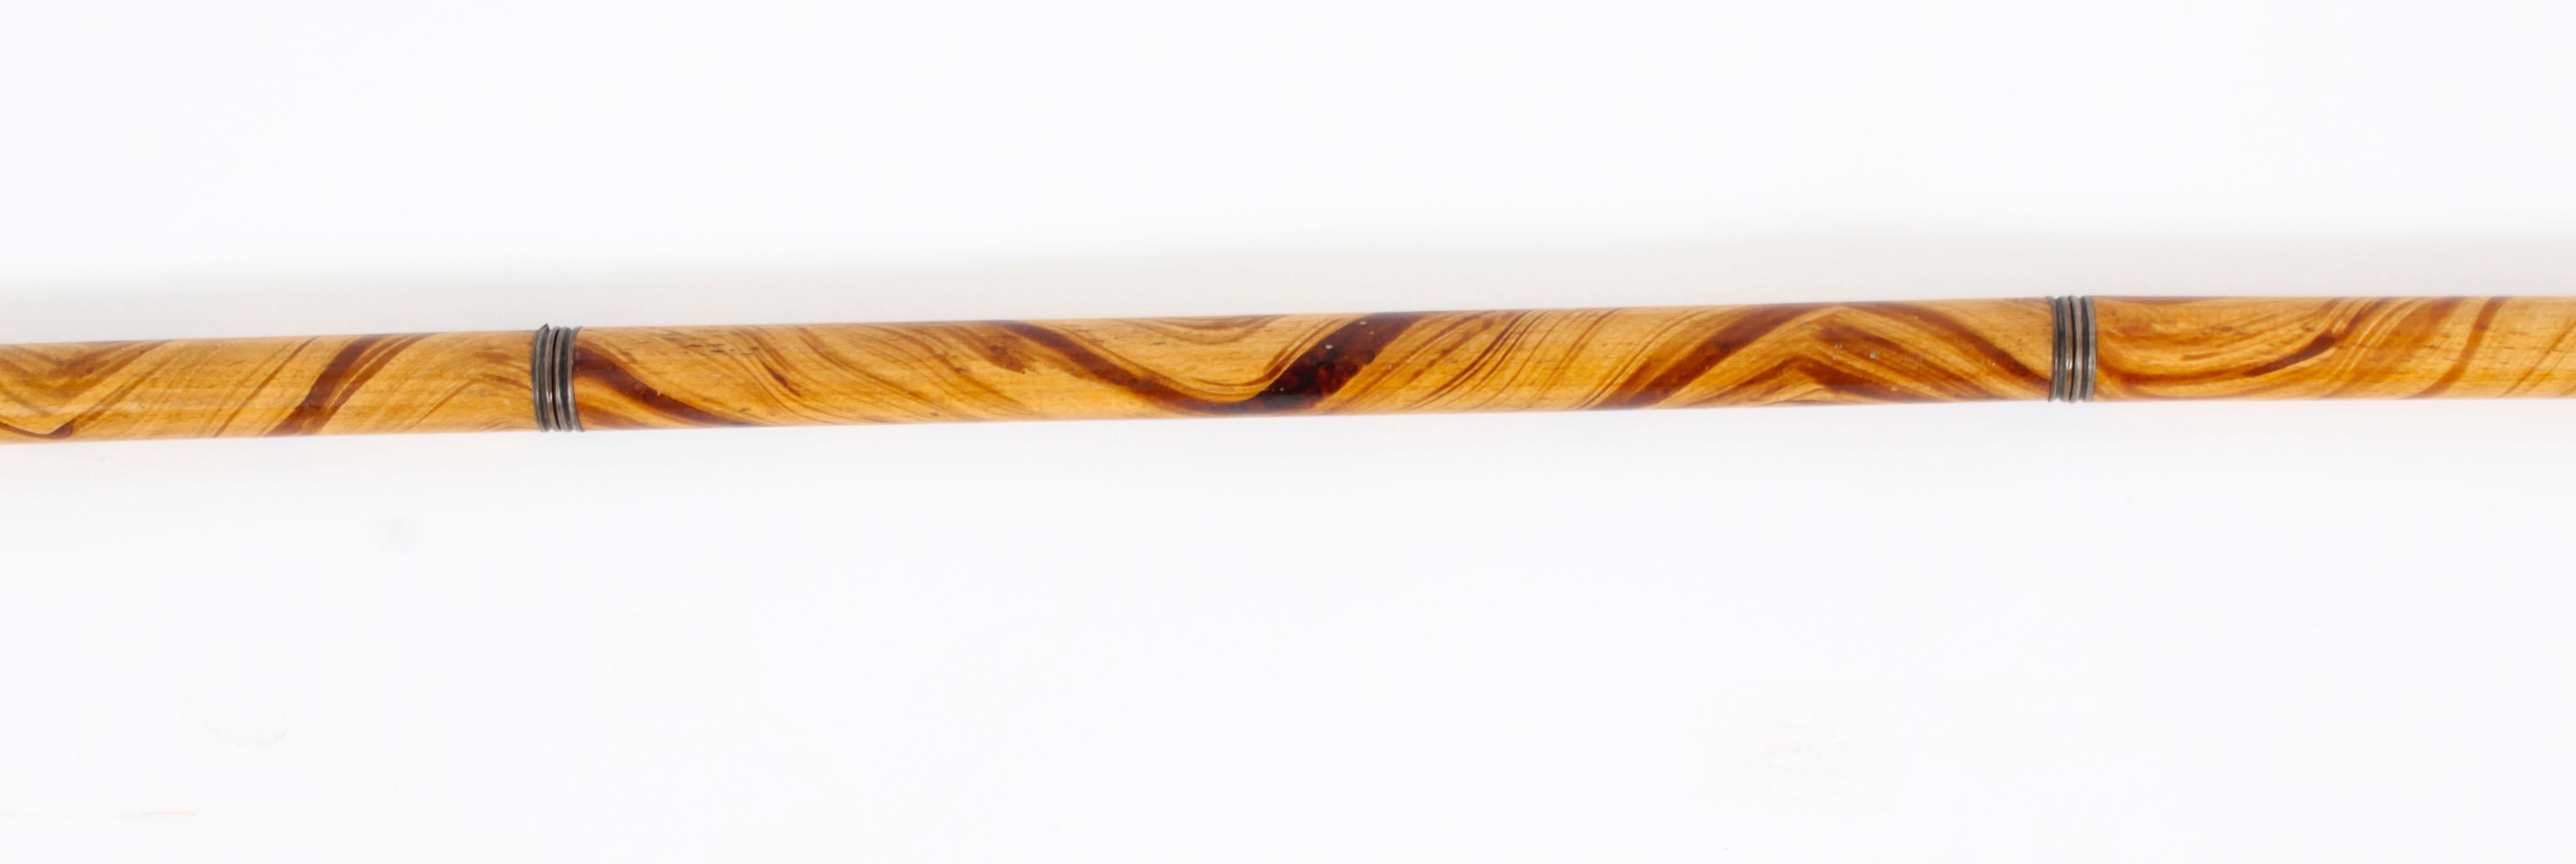 Hardwood Antique Novelty 'Pen and pencil' Walking Cane Stick 19th Century